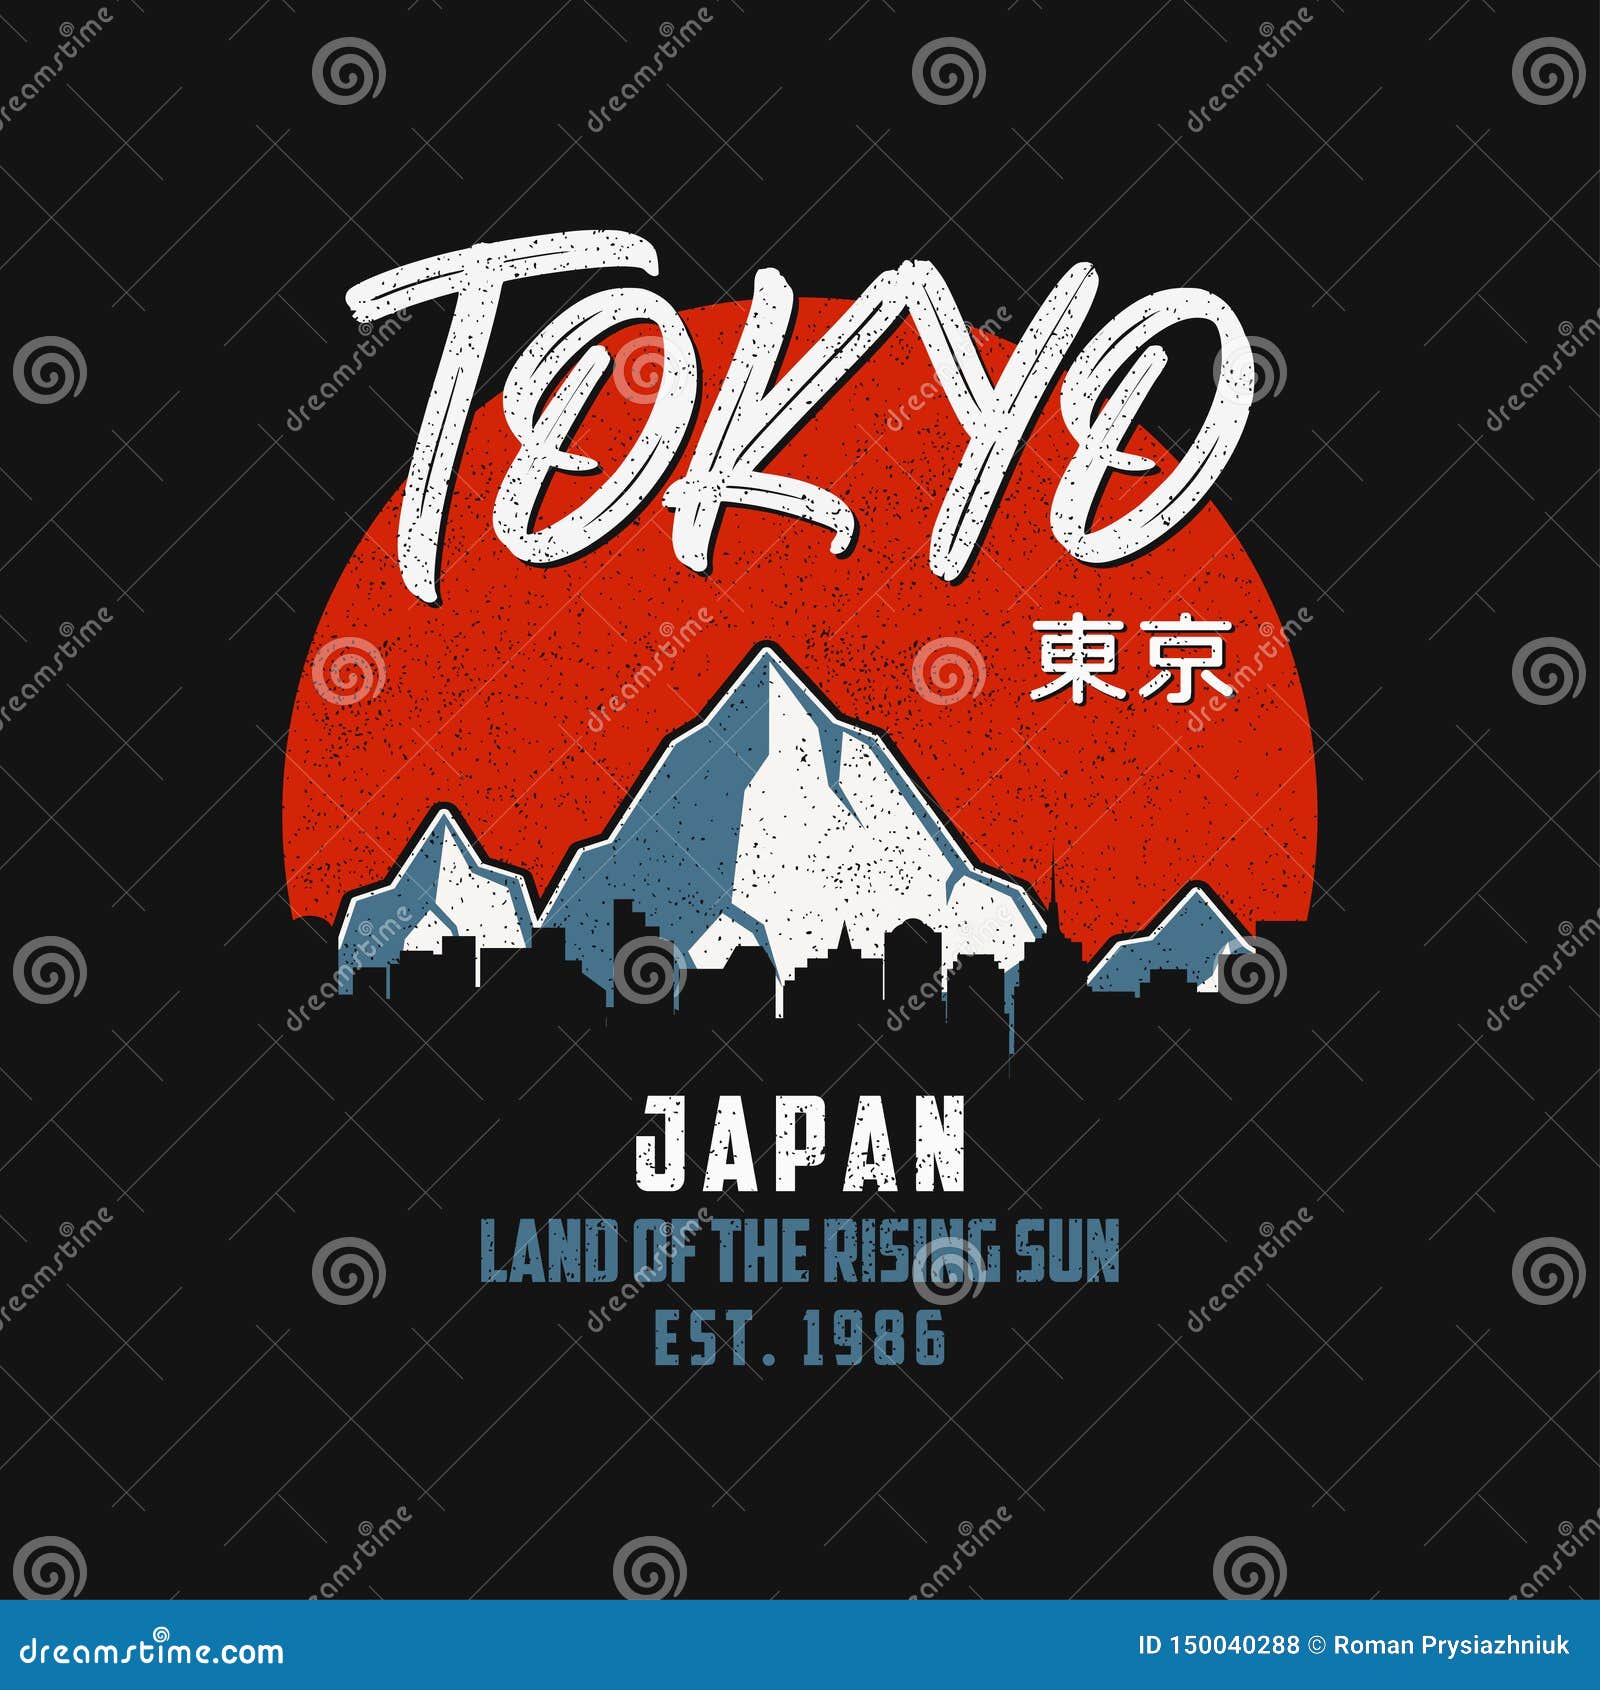 tokyo tourism slogan